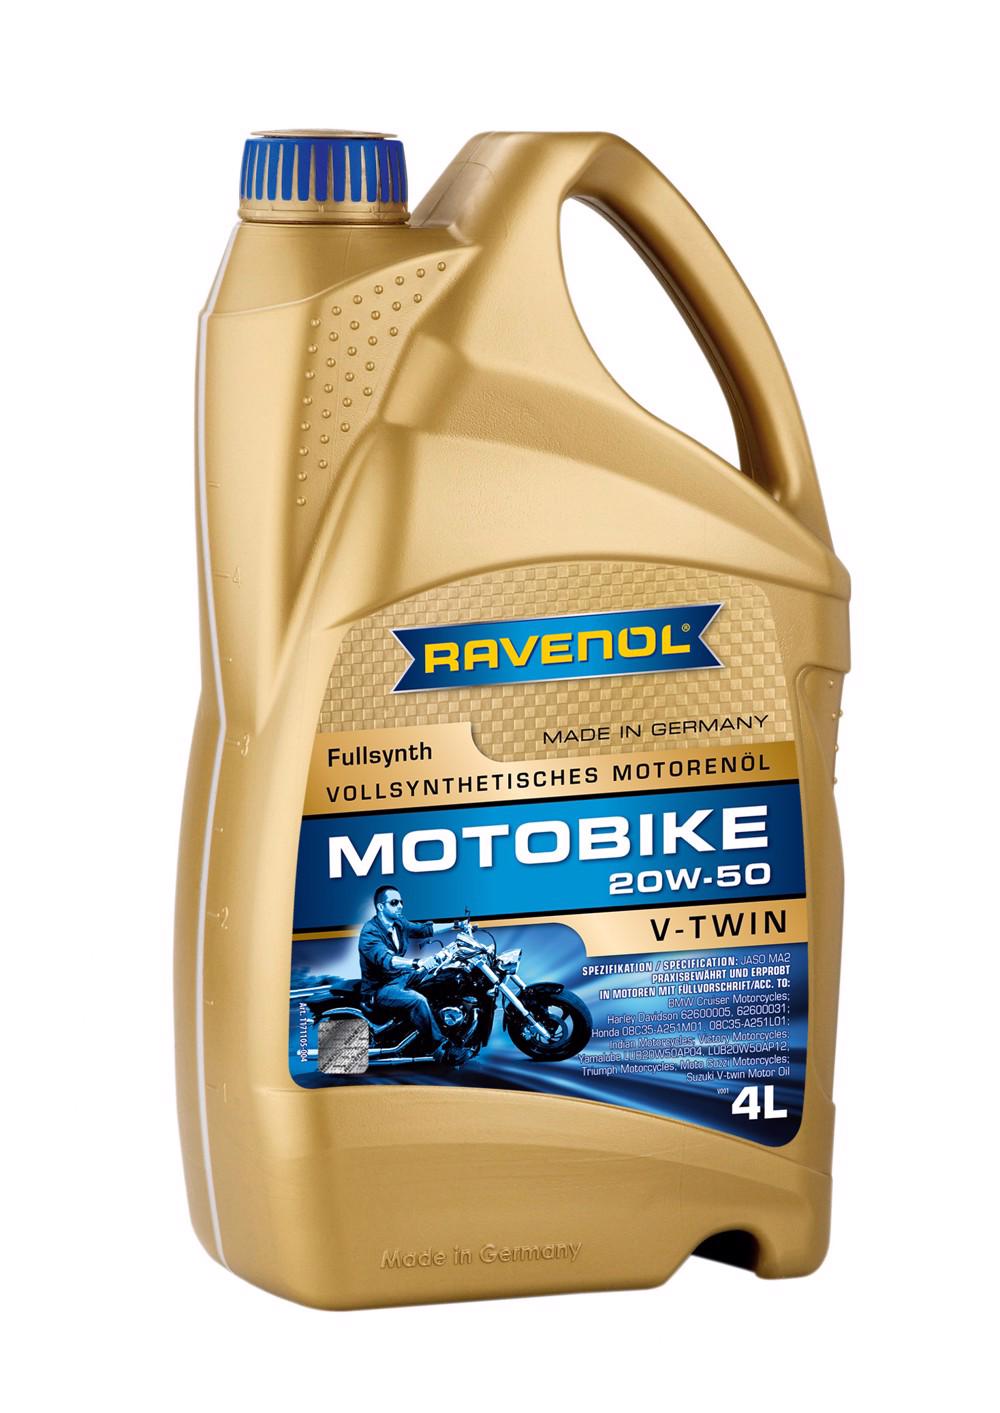 RAVENOL Motobike V-Twin SAE 20W-50 Fullsynth.  4 L